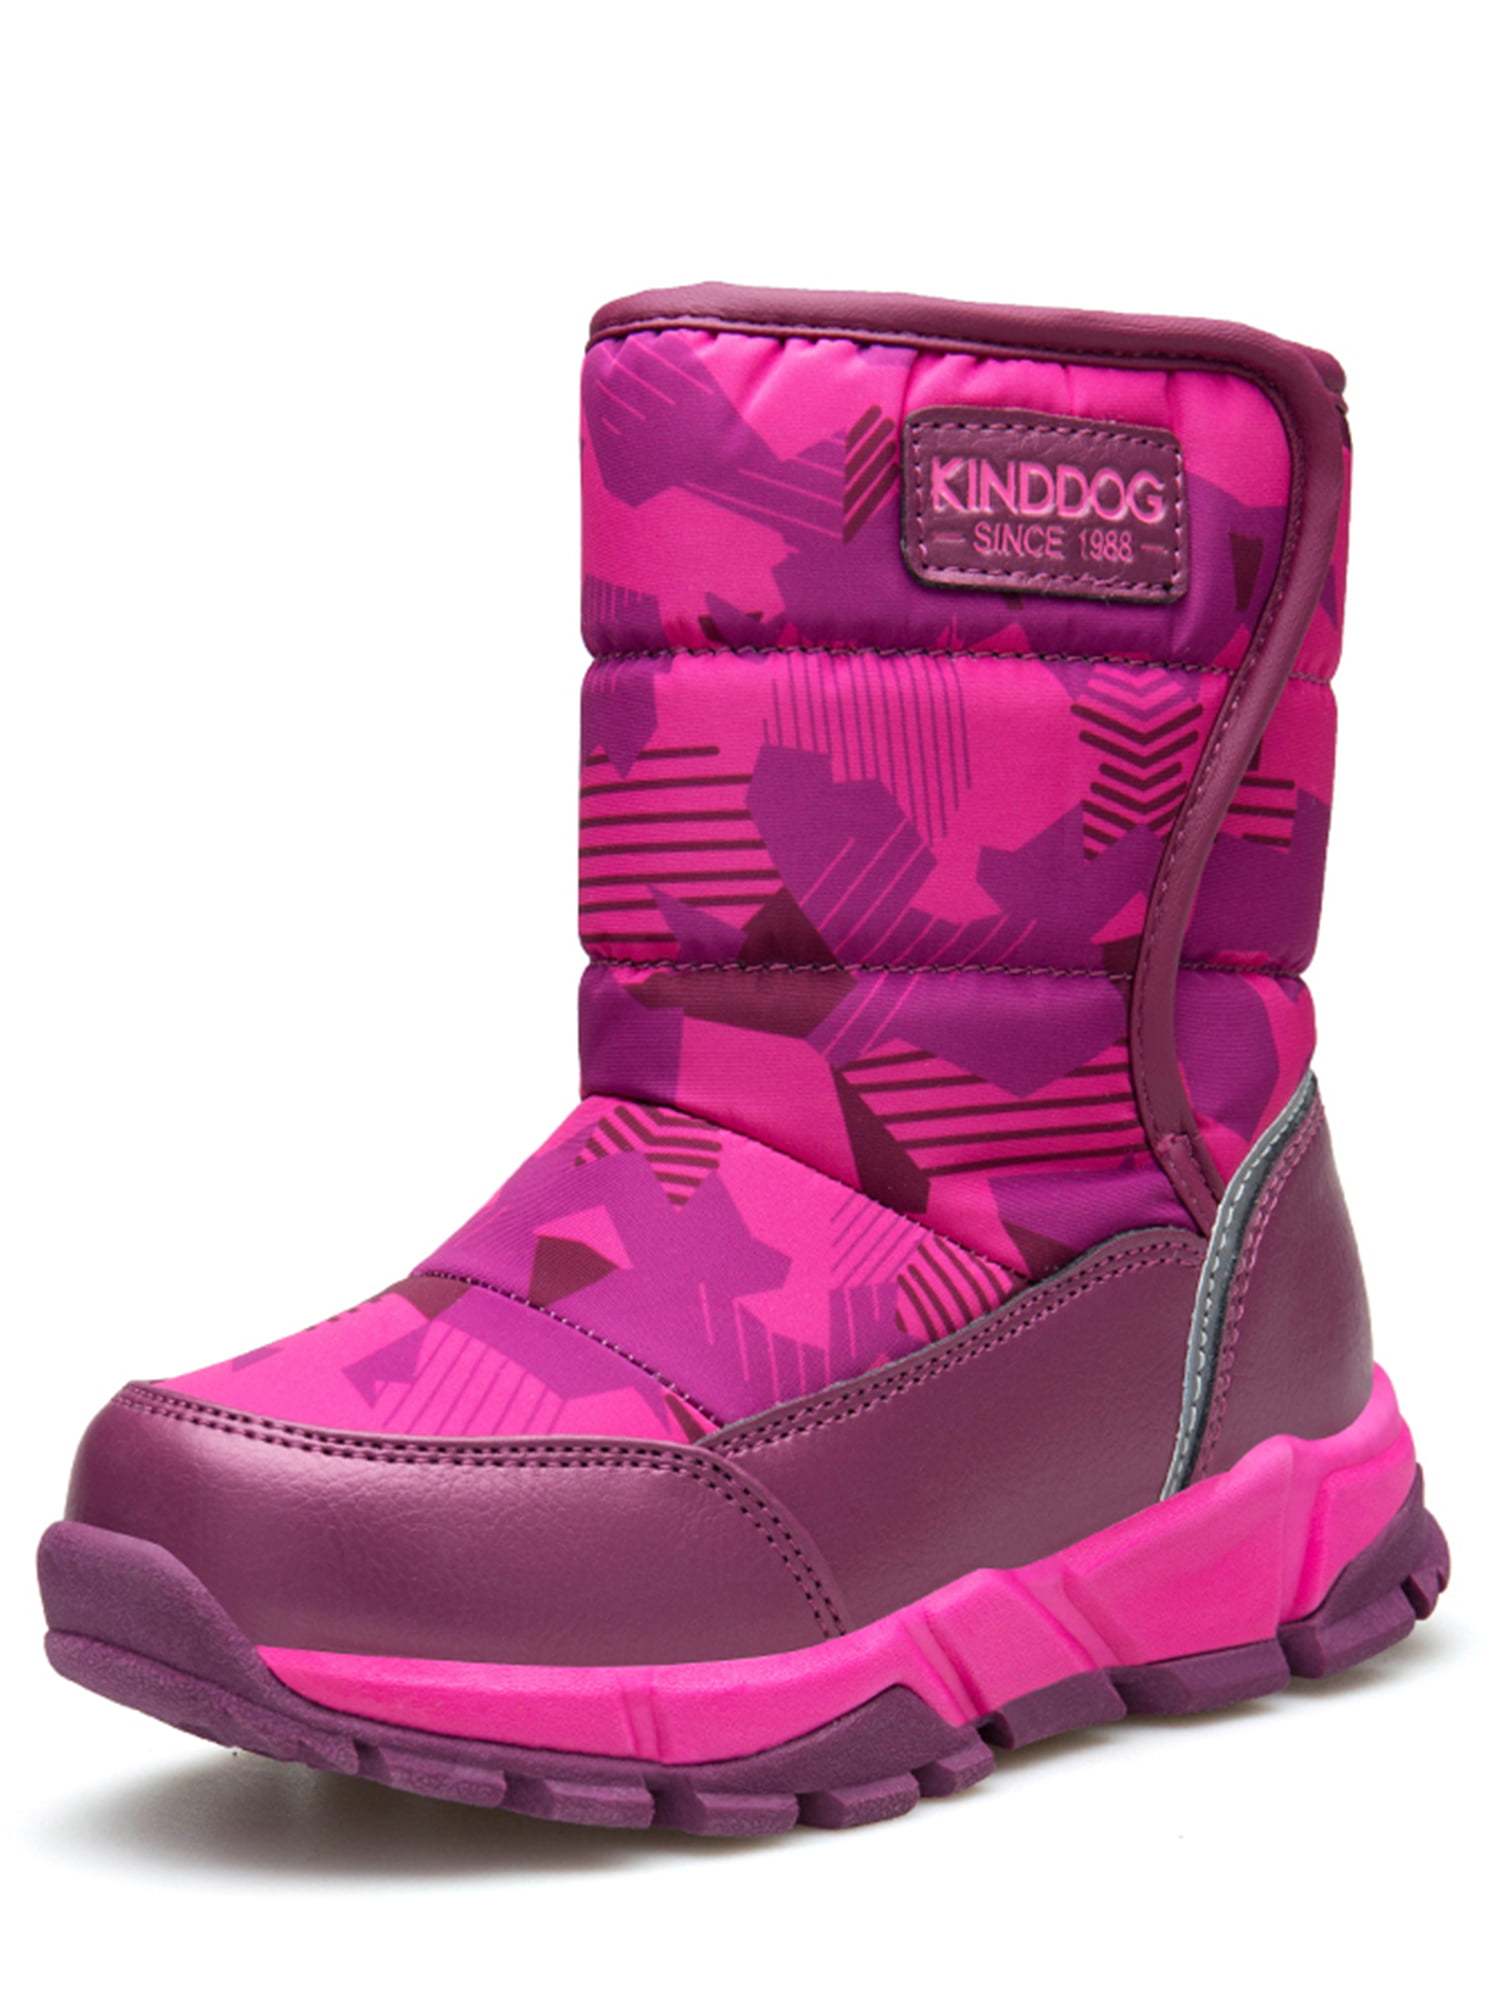 childrens waterproof winter boots